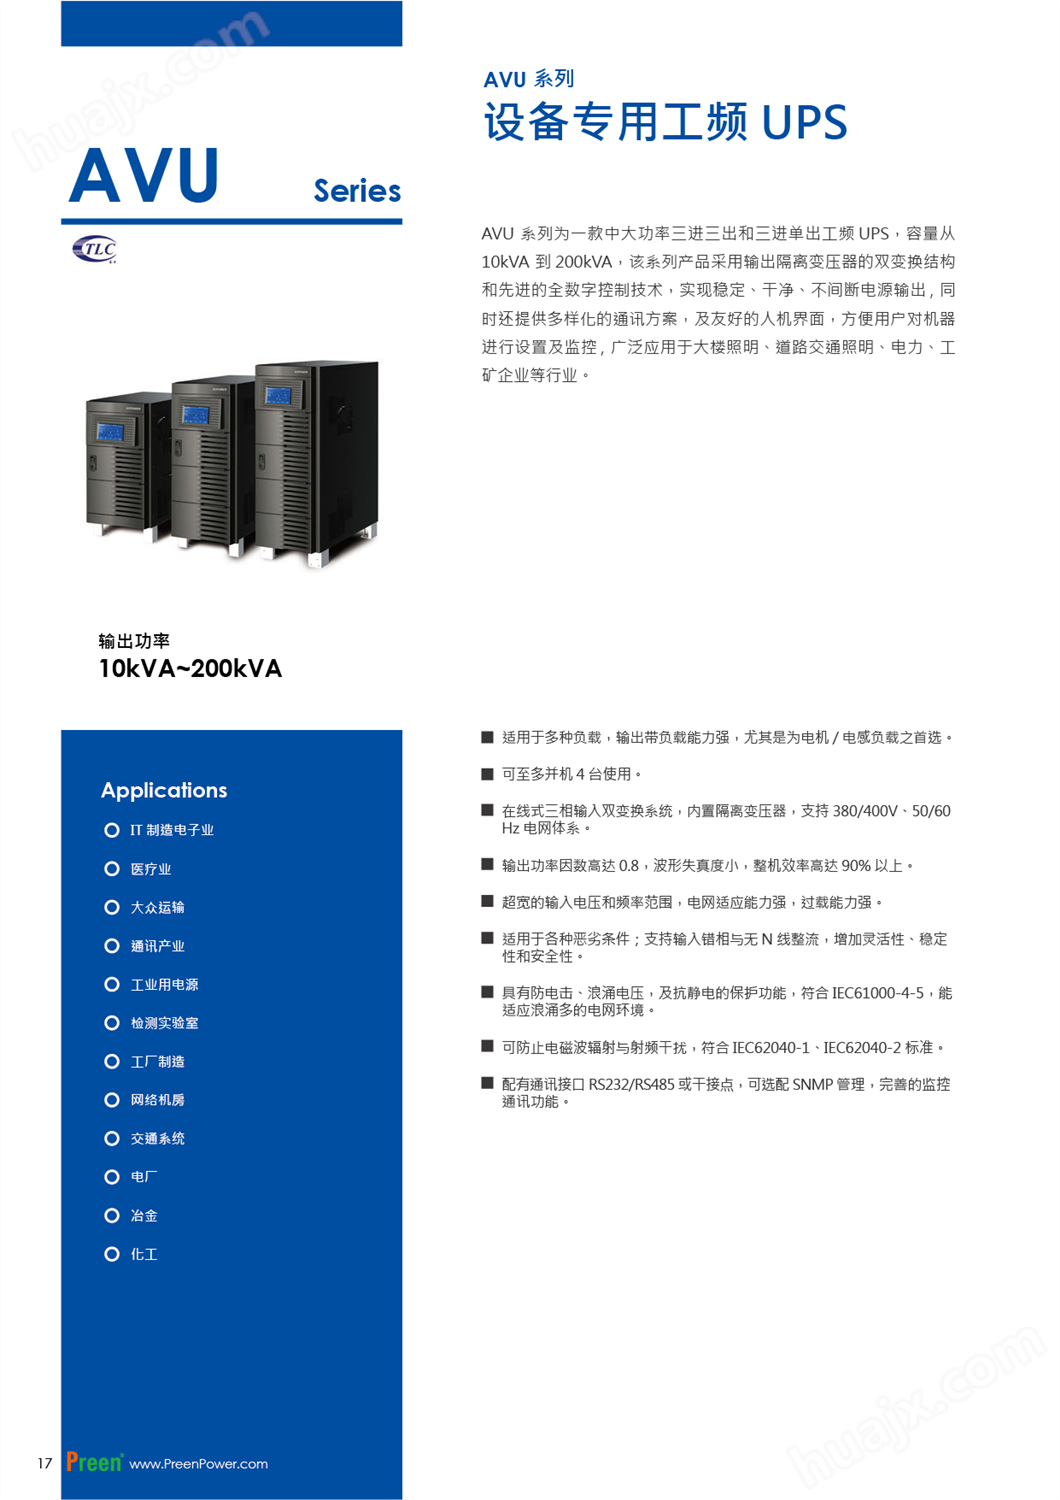 APC艾普斯设备专用工频UPS AVU系列(图1)